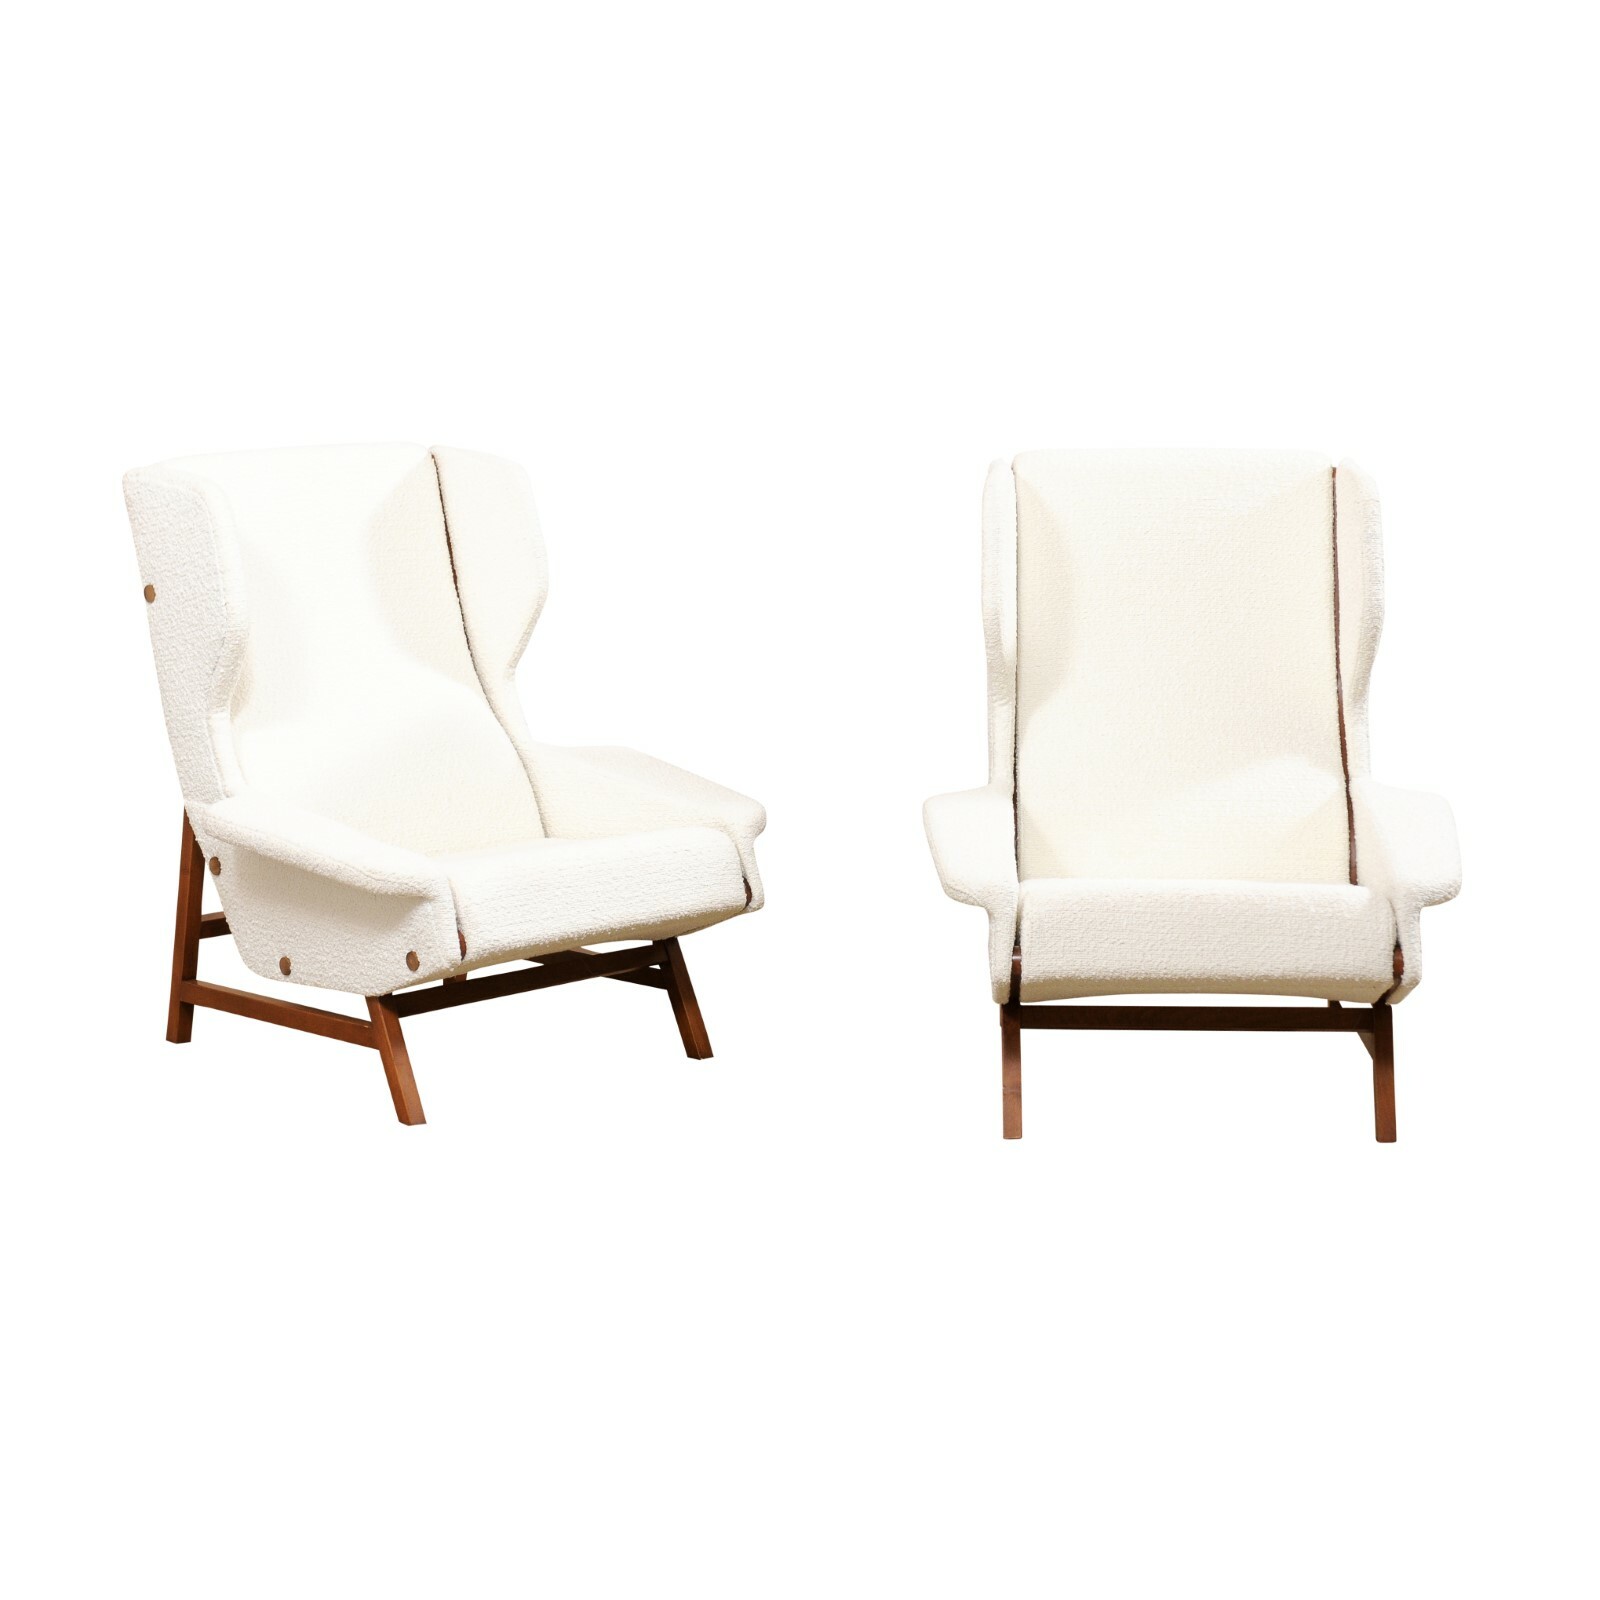 Fashionably Modern Italian Wingback Chairs